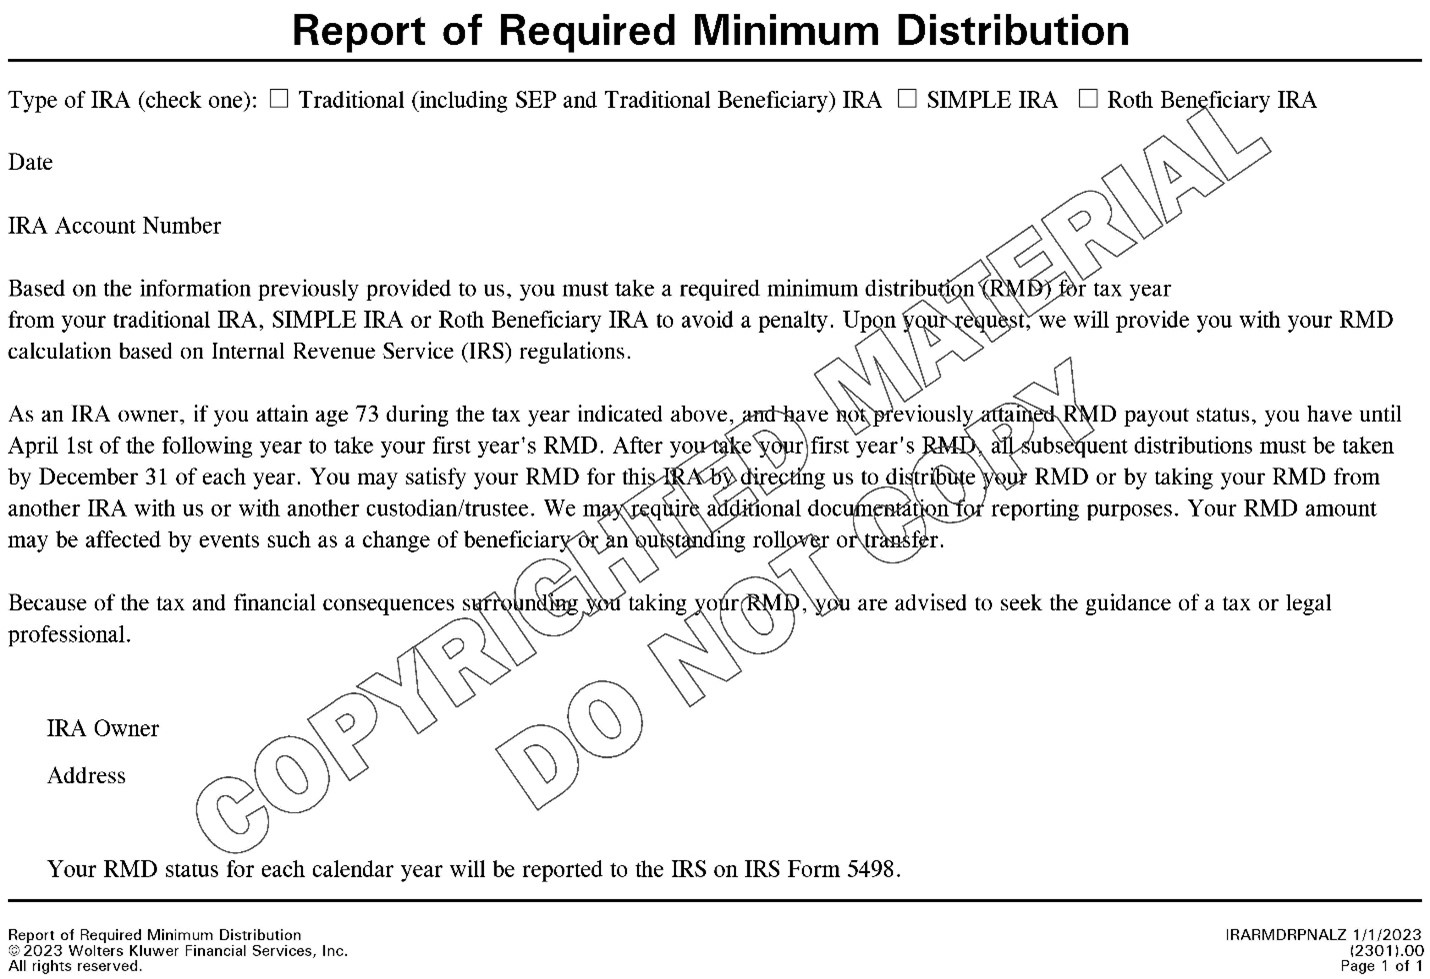 2022 Report of Required Minimum Distribution